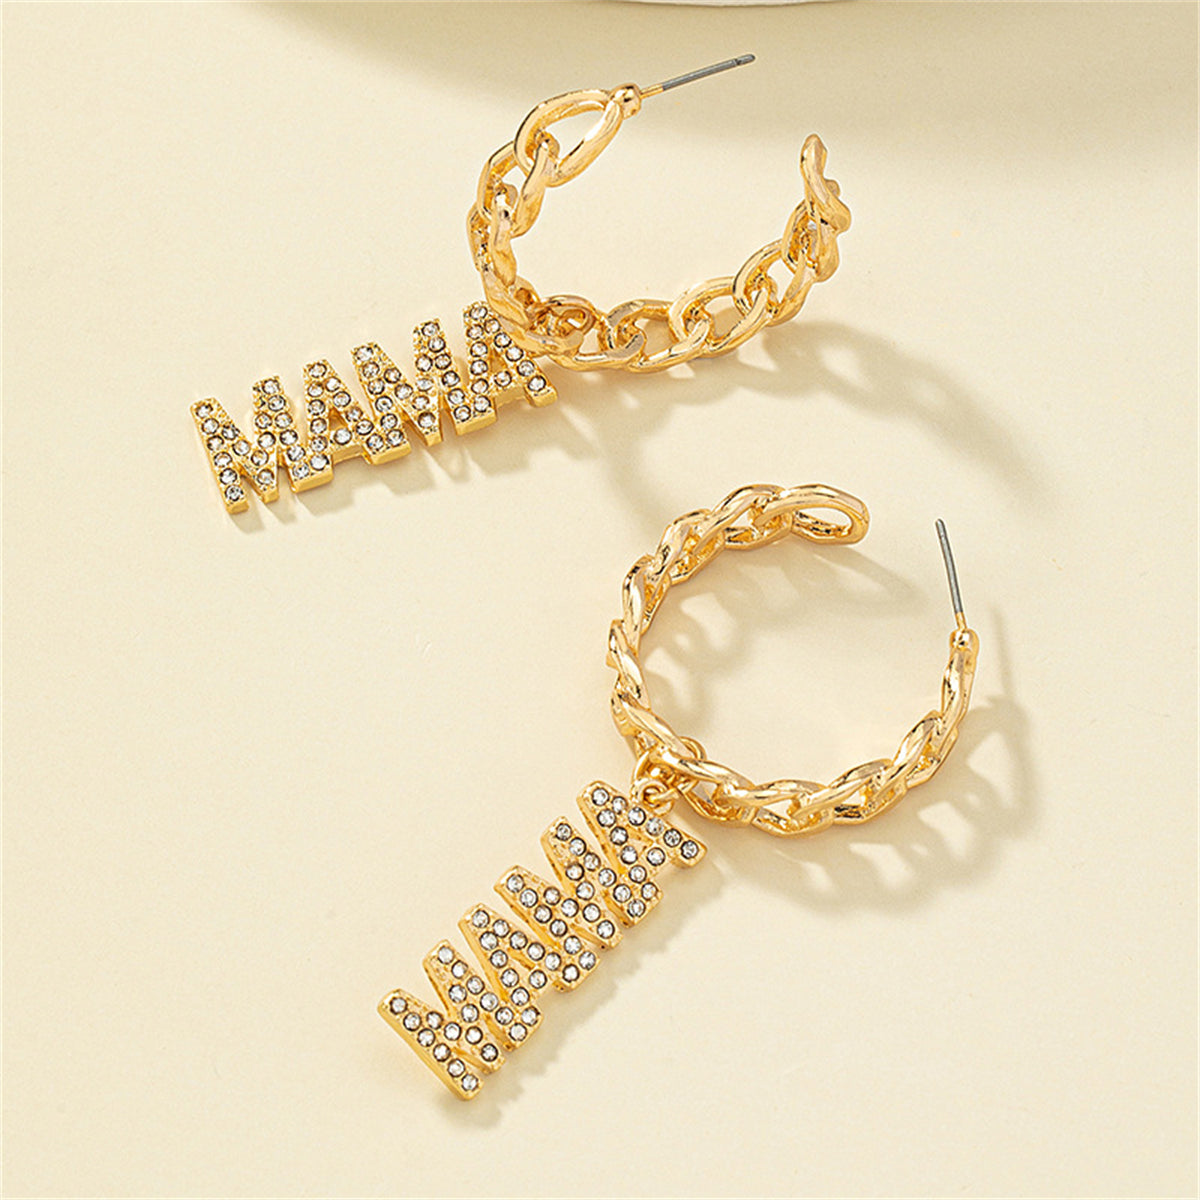 Cubic Zirconia & 18K Gold-Plated 'Mama' Chain Hoop Earrings